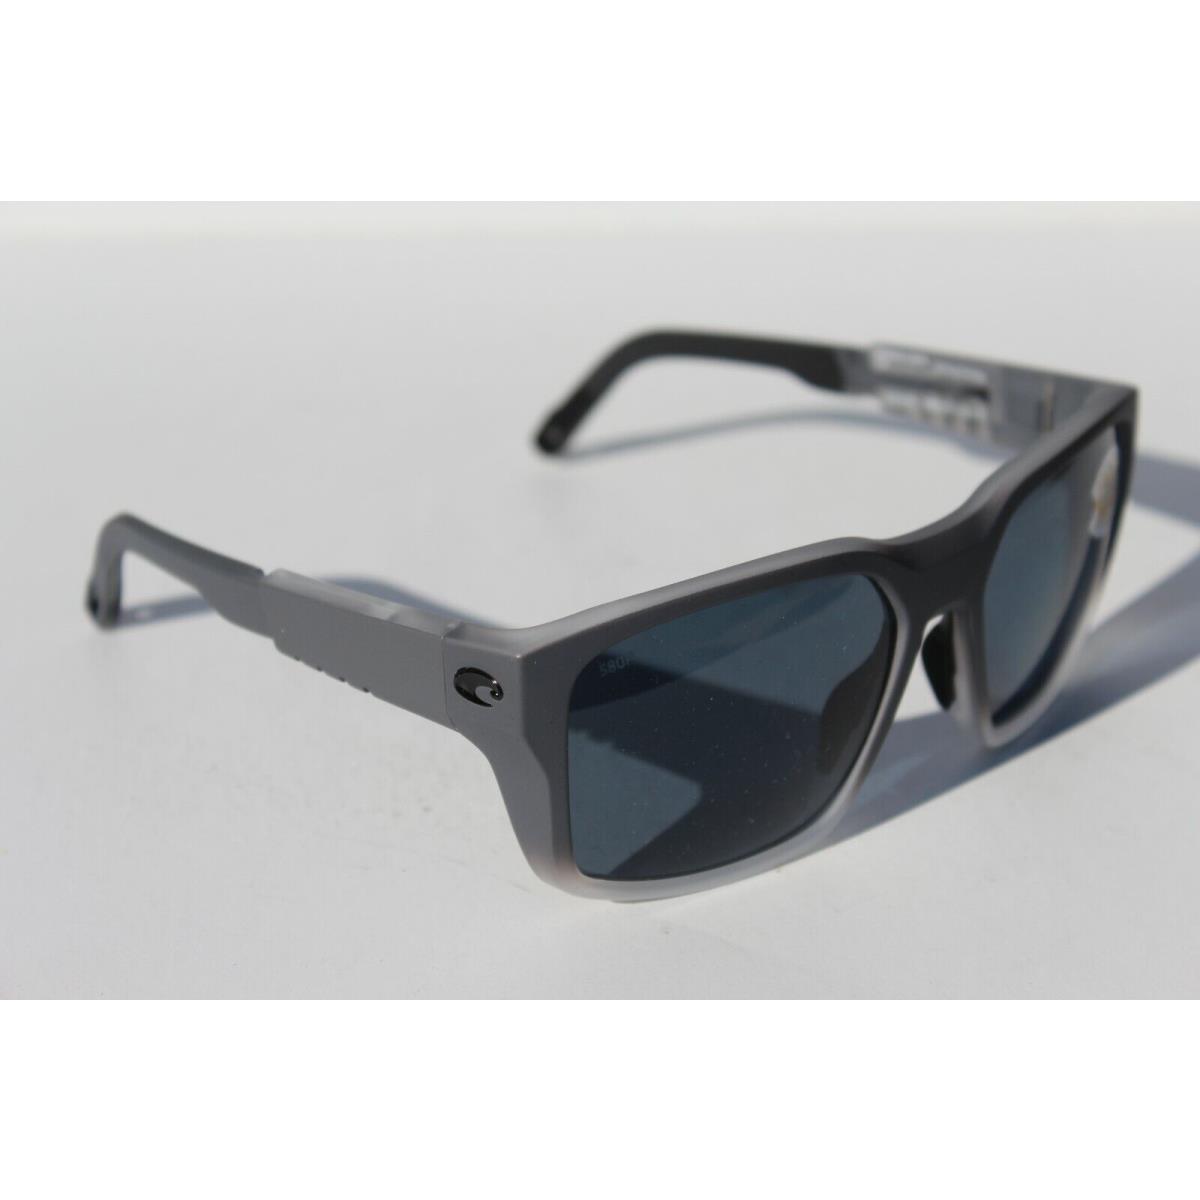 Costa Del Mar sunglasses Tailwalker - Frame: Gray, Lens: Gray 3